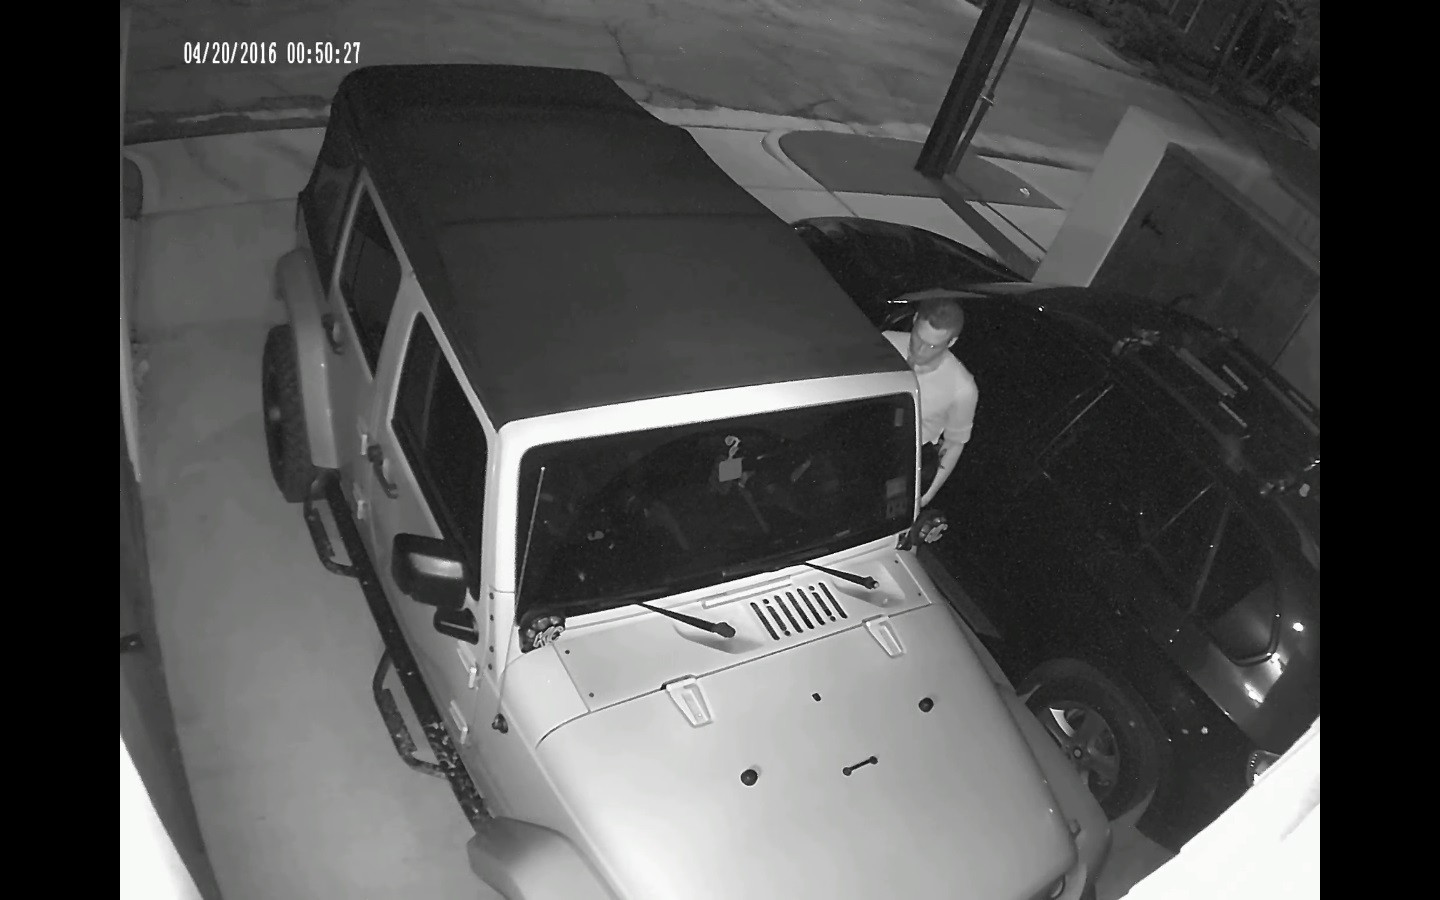 Jeep Wrangler furtado por hacker